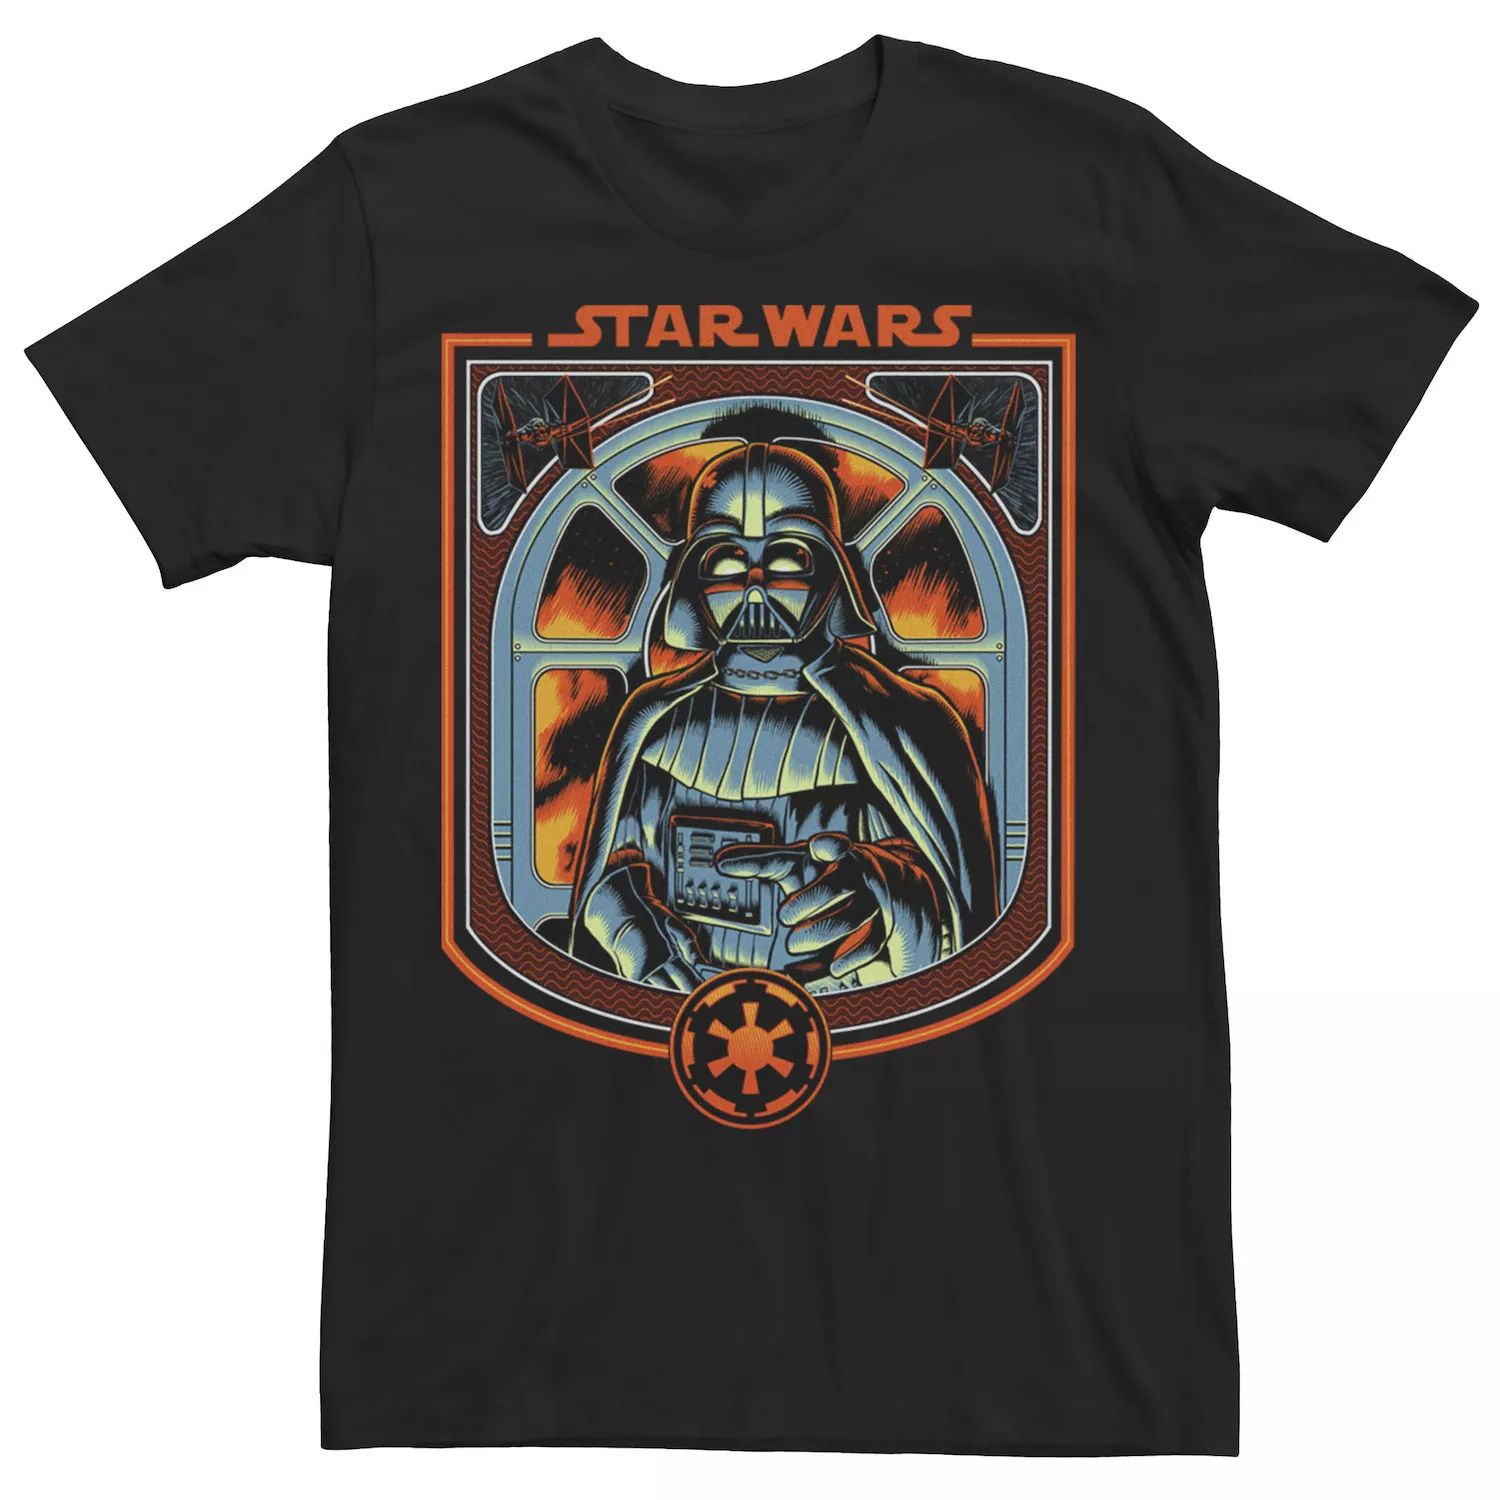 Мужская футболка со светящимся портретом Дарта Вейдера Star Wars